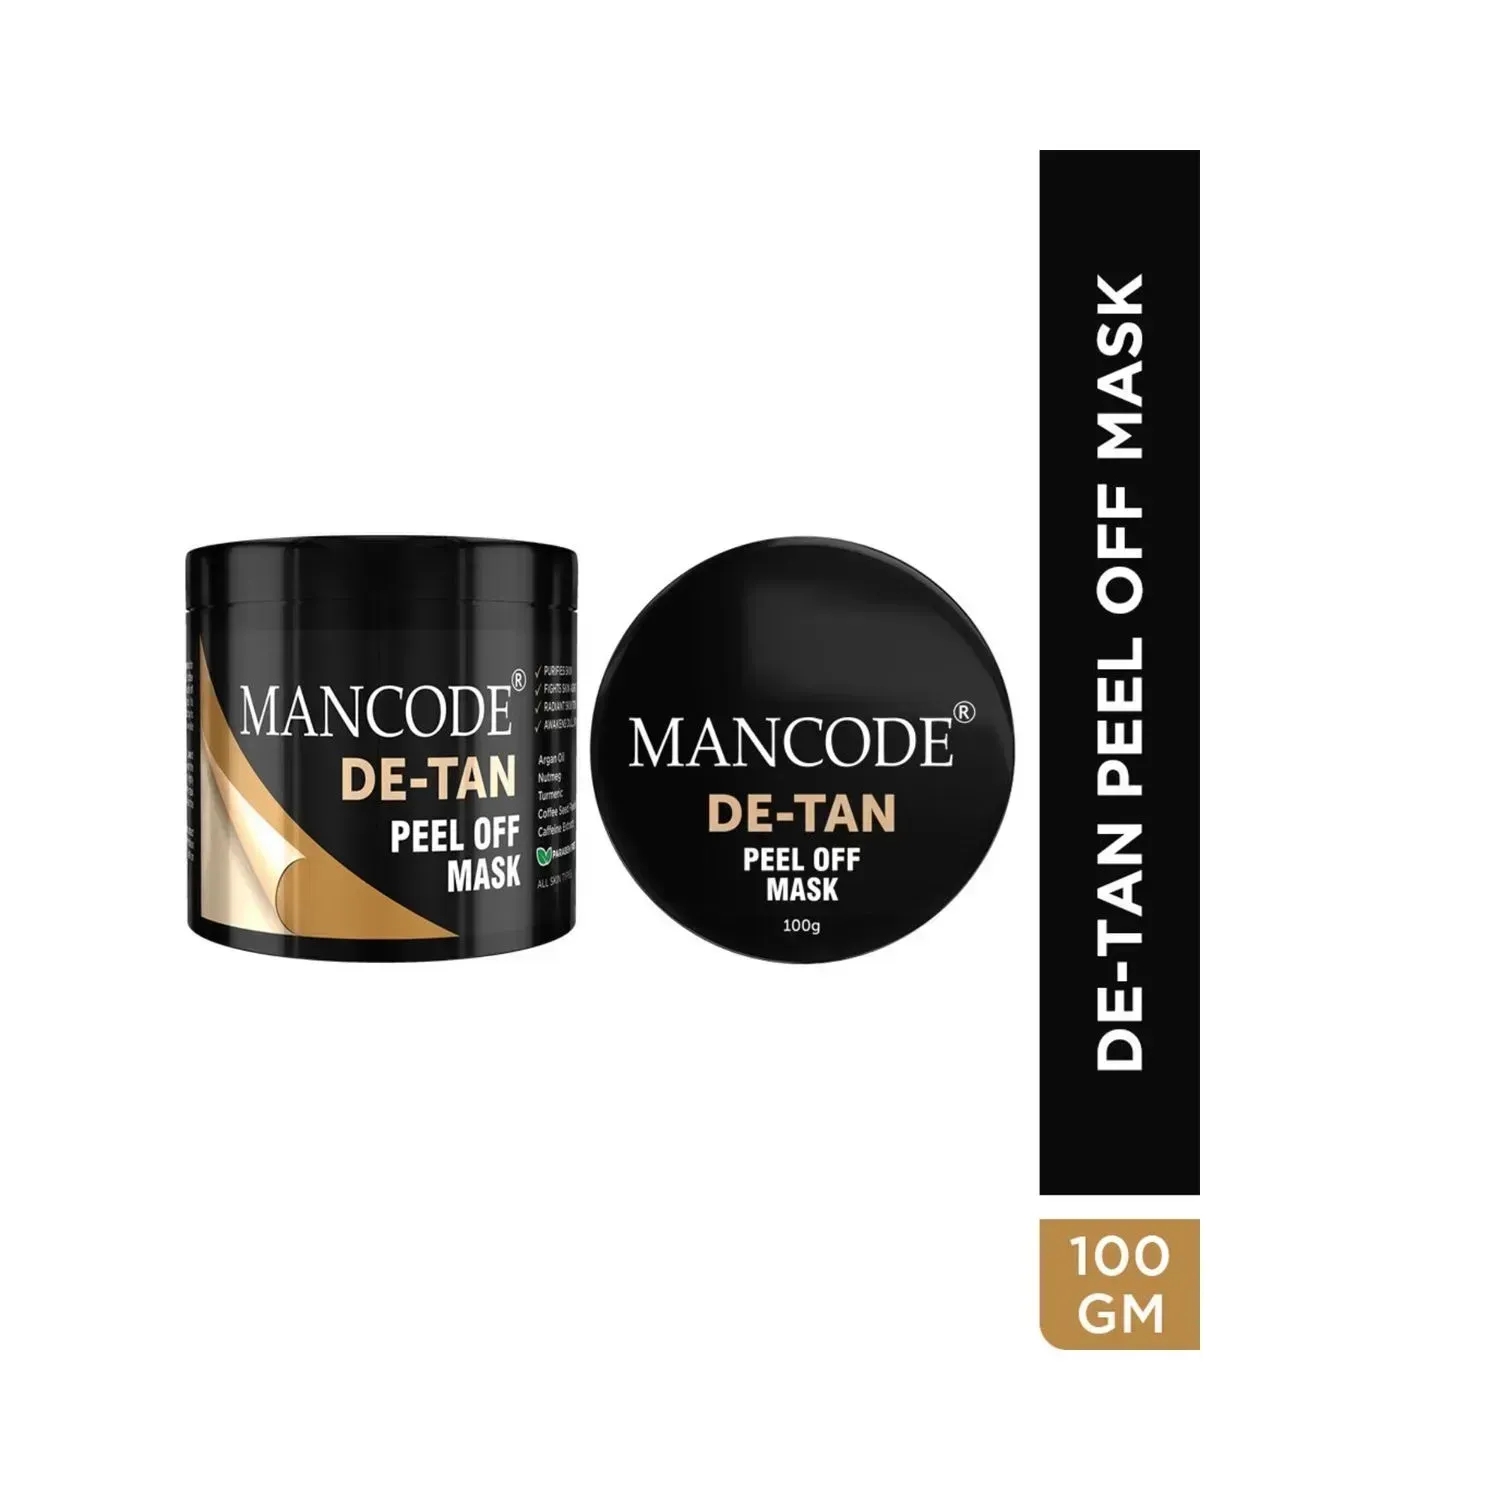 Mancode | Mancode De-Tan Peel Off Mask - (100g)